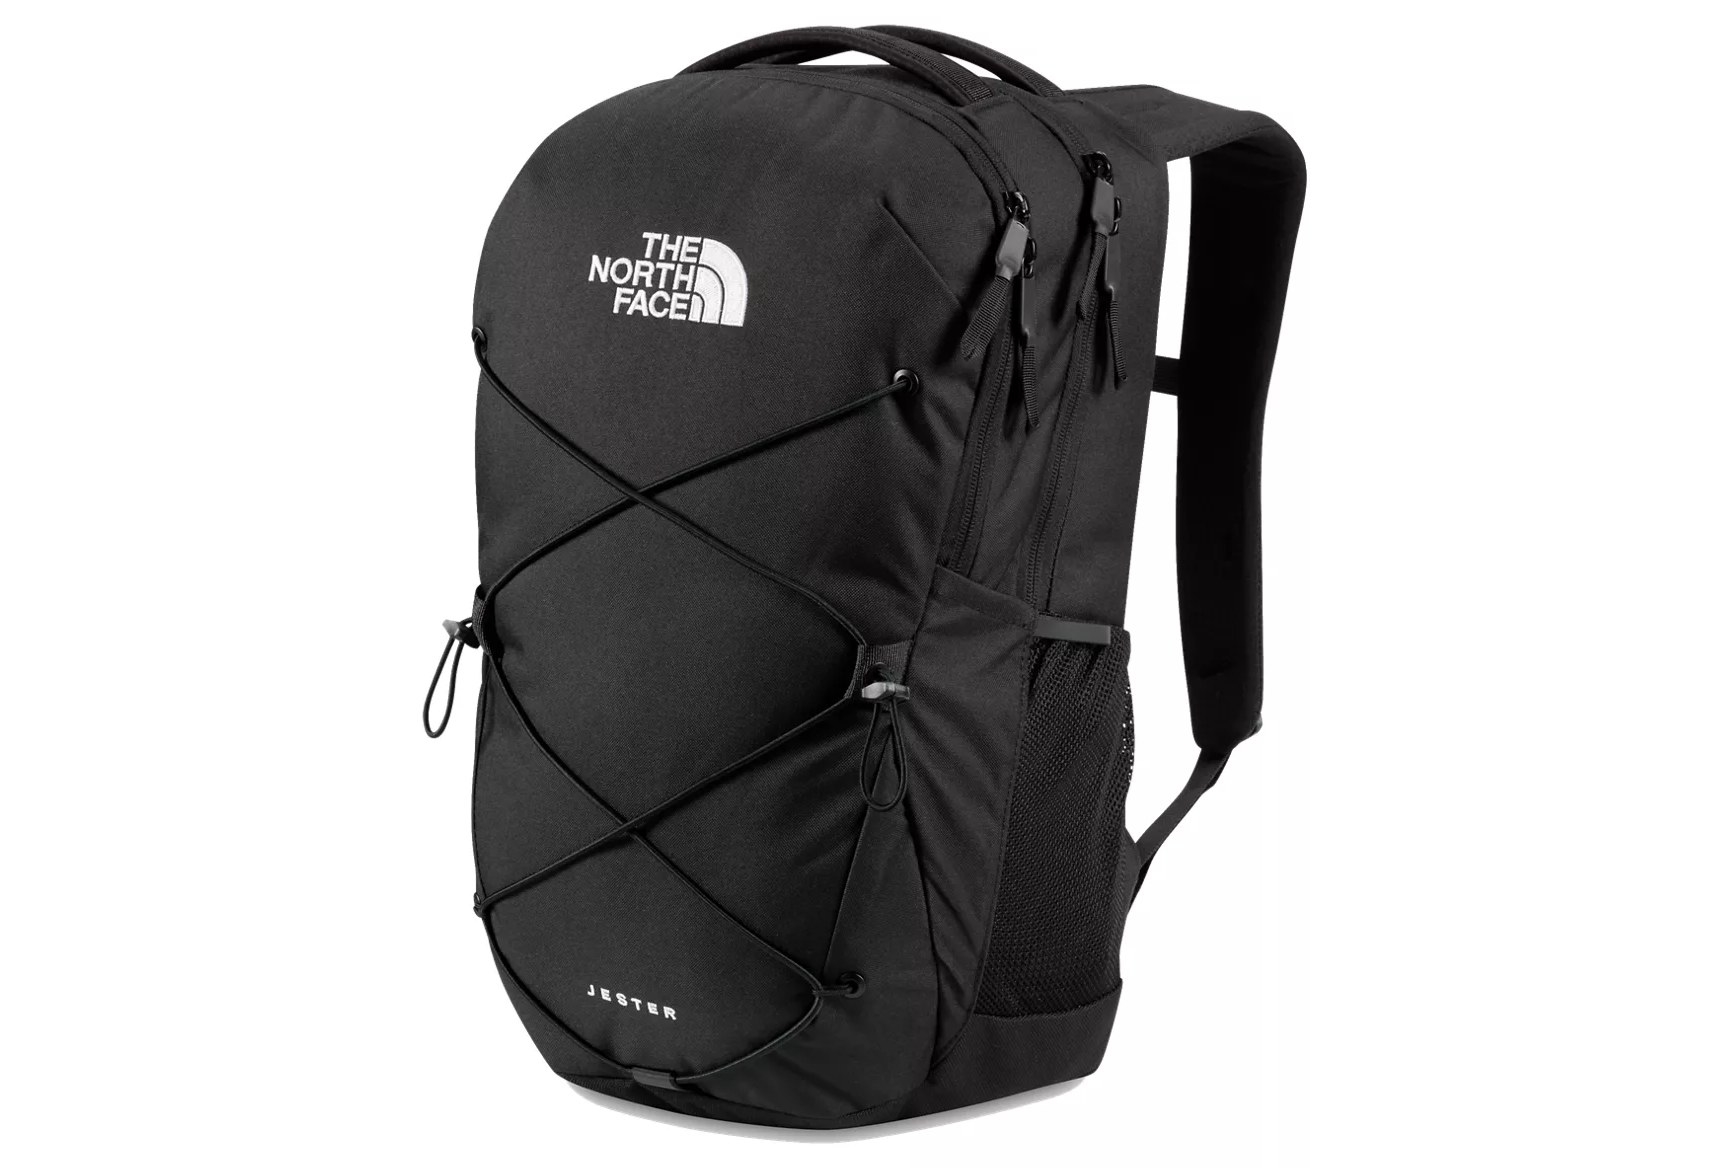 The black backpack 